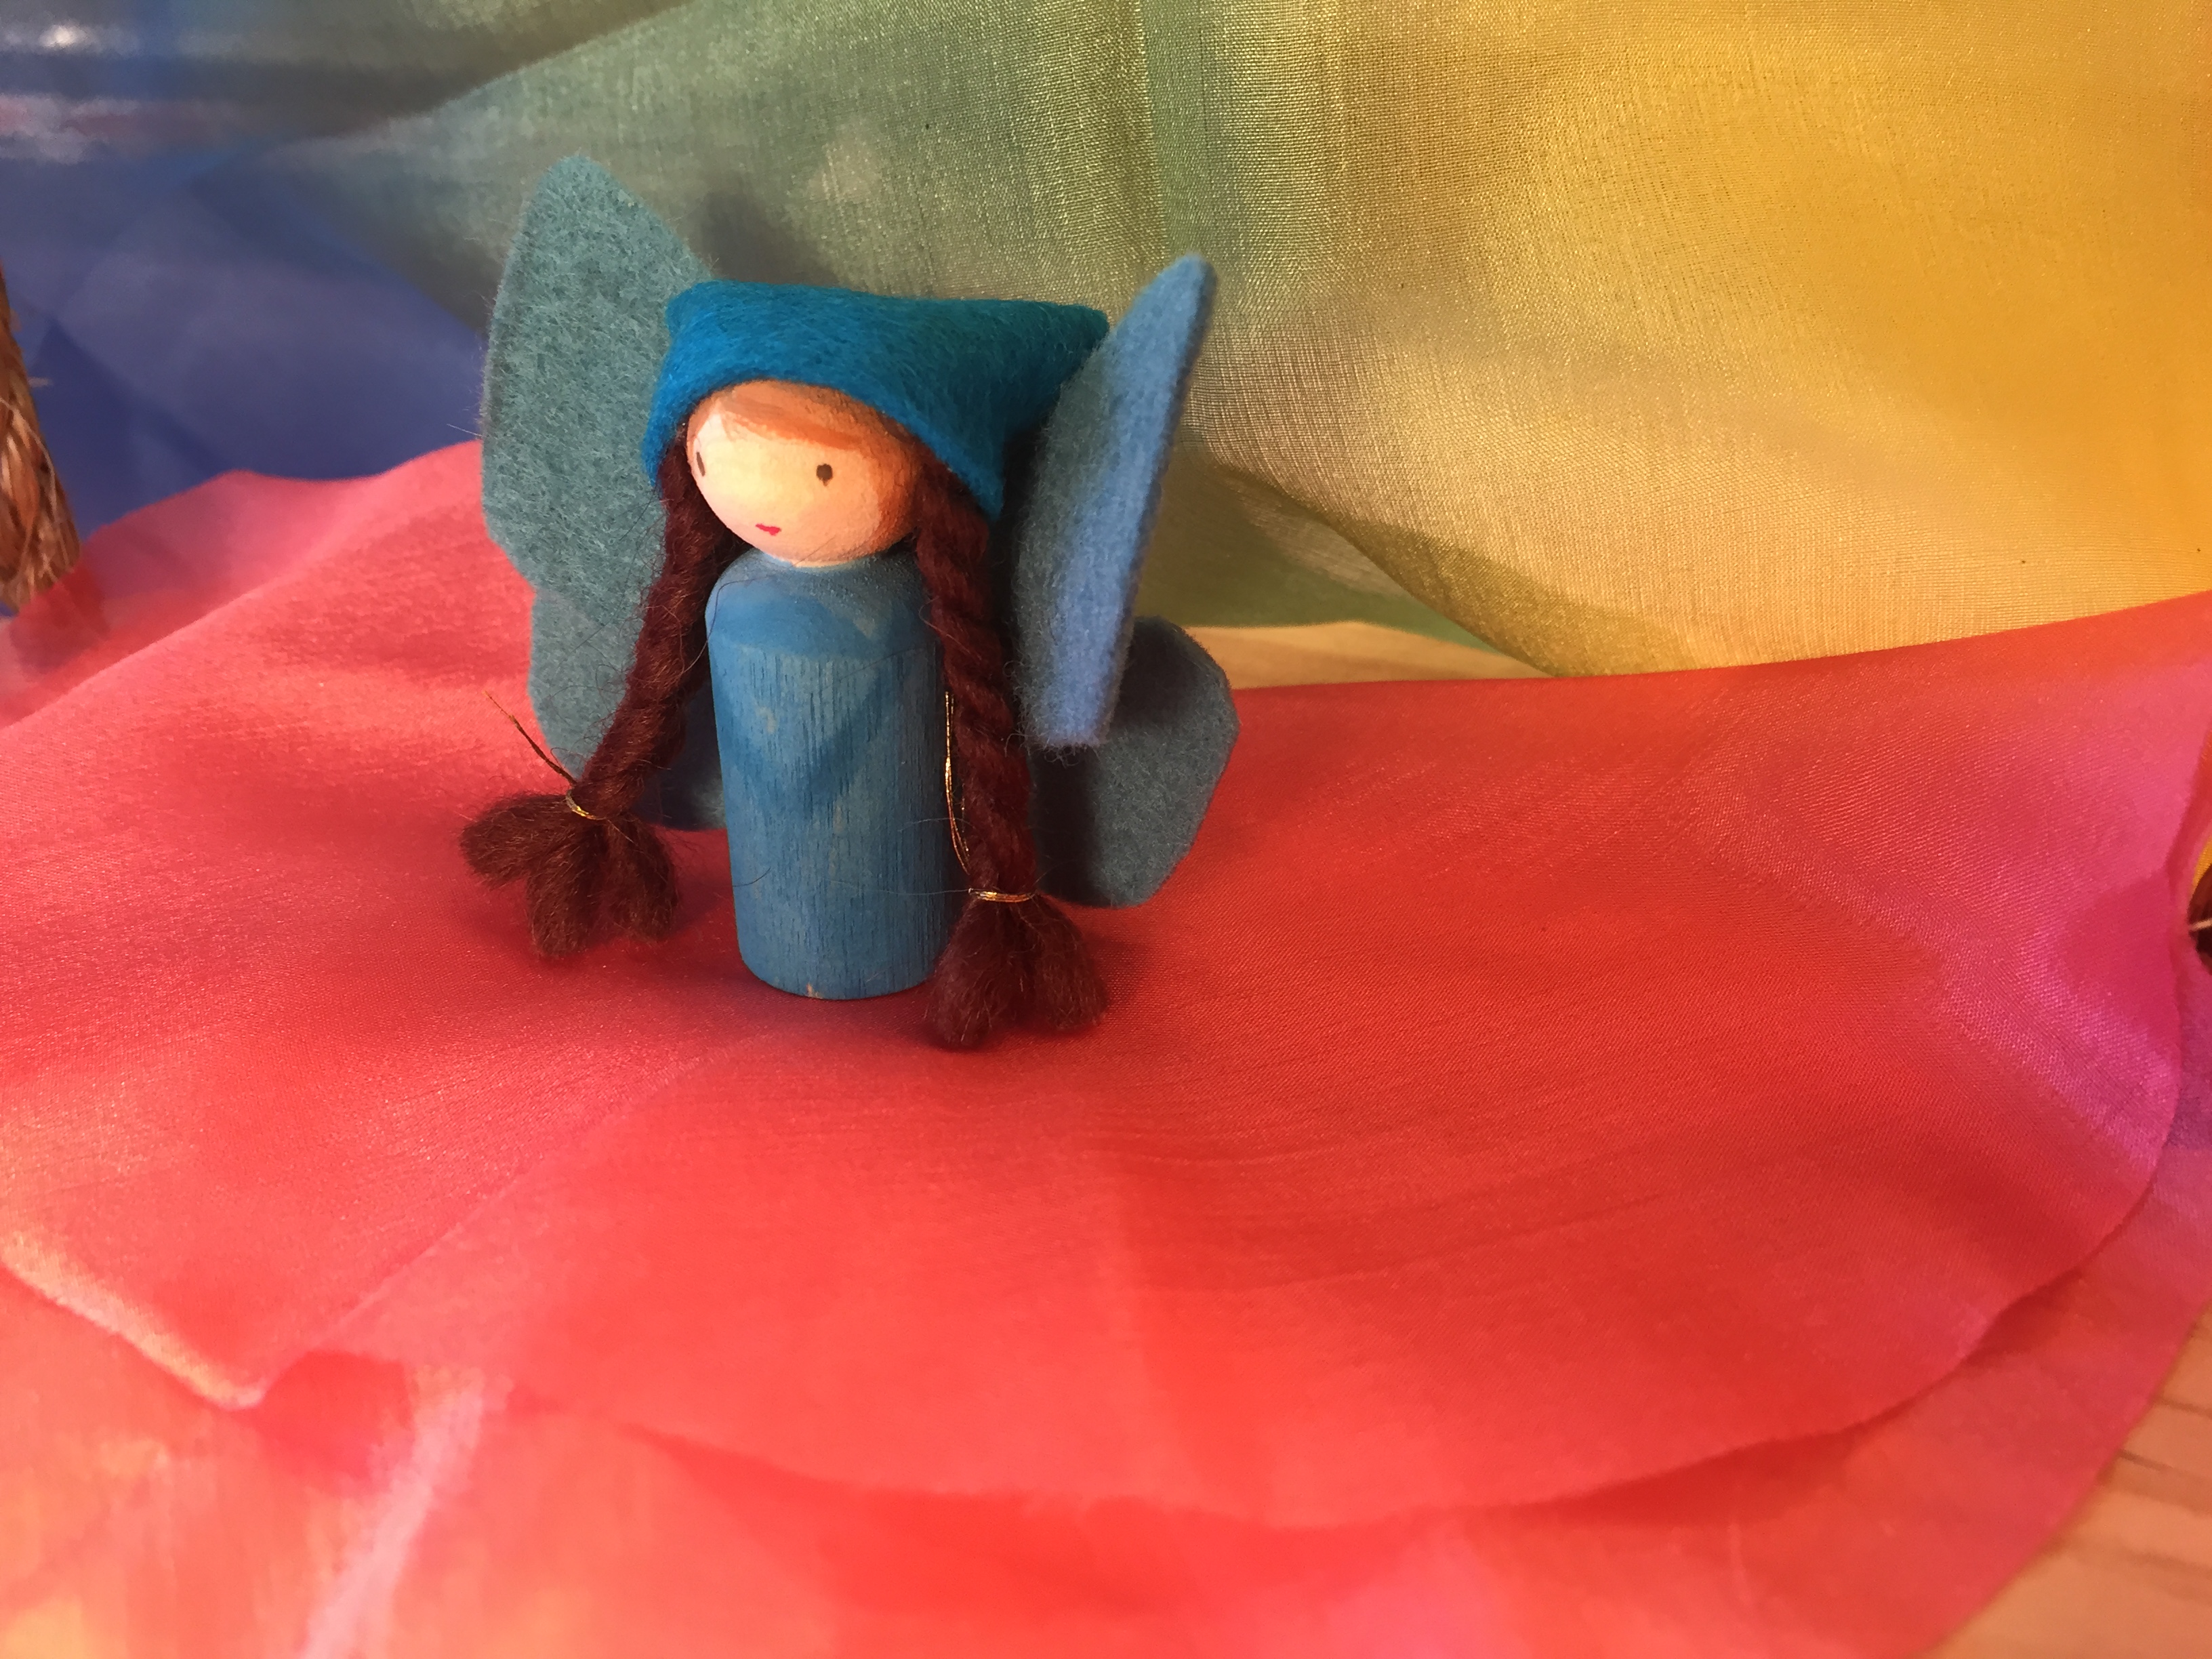 Peg Doll Hand Sewing Kit - Fairy Folk - A Child's Dream